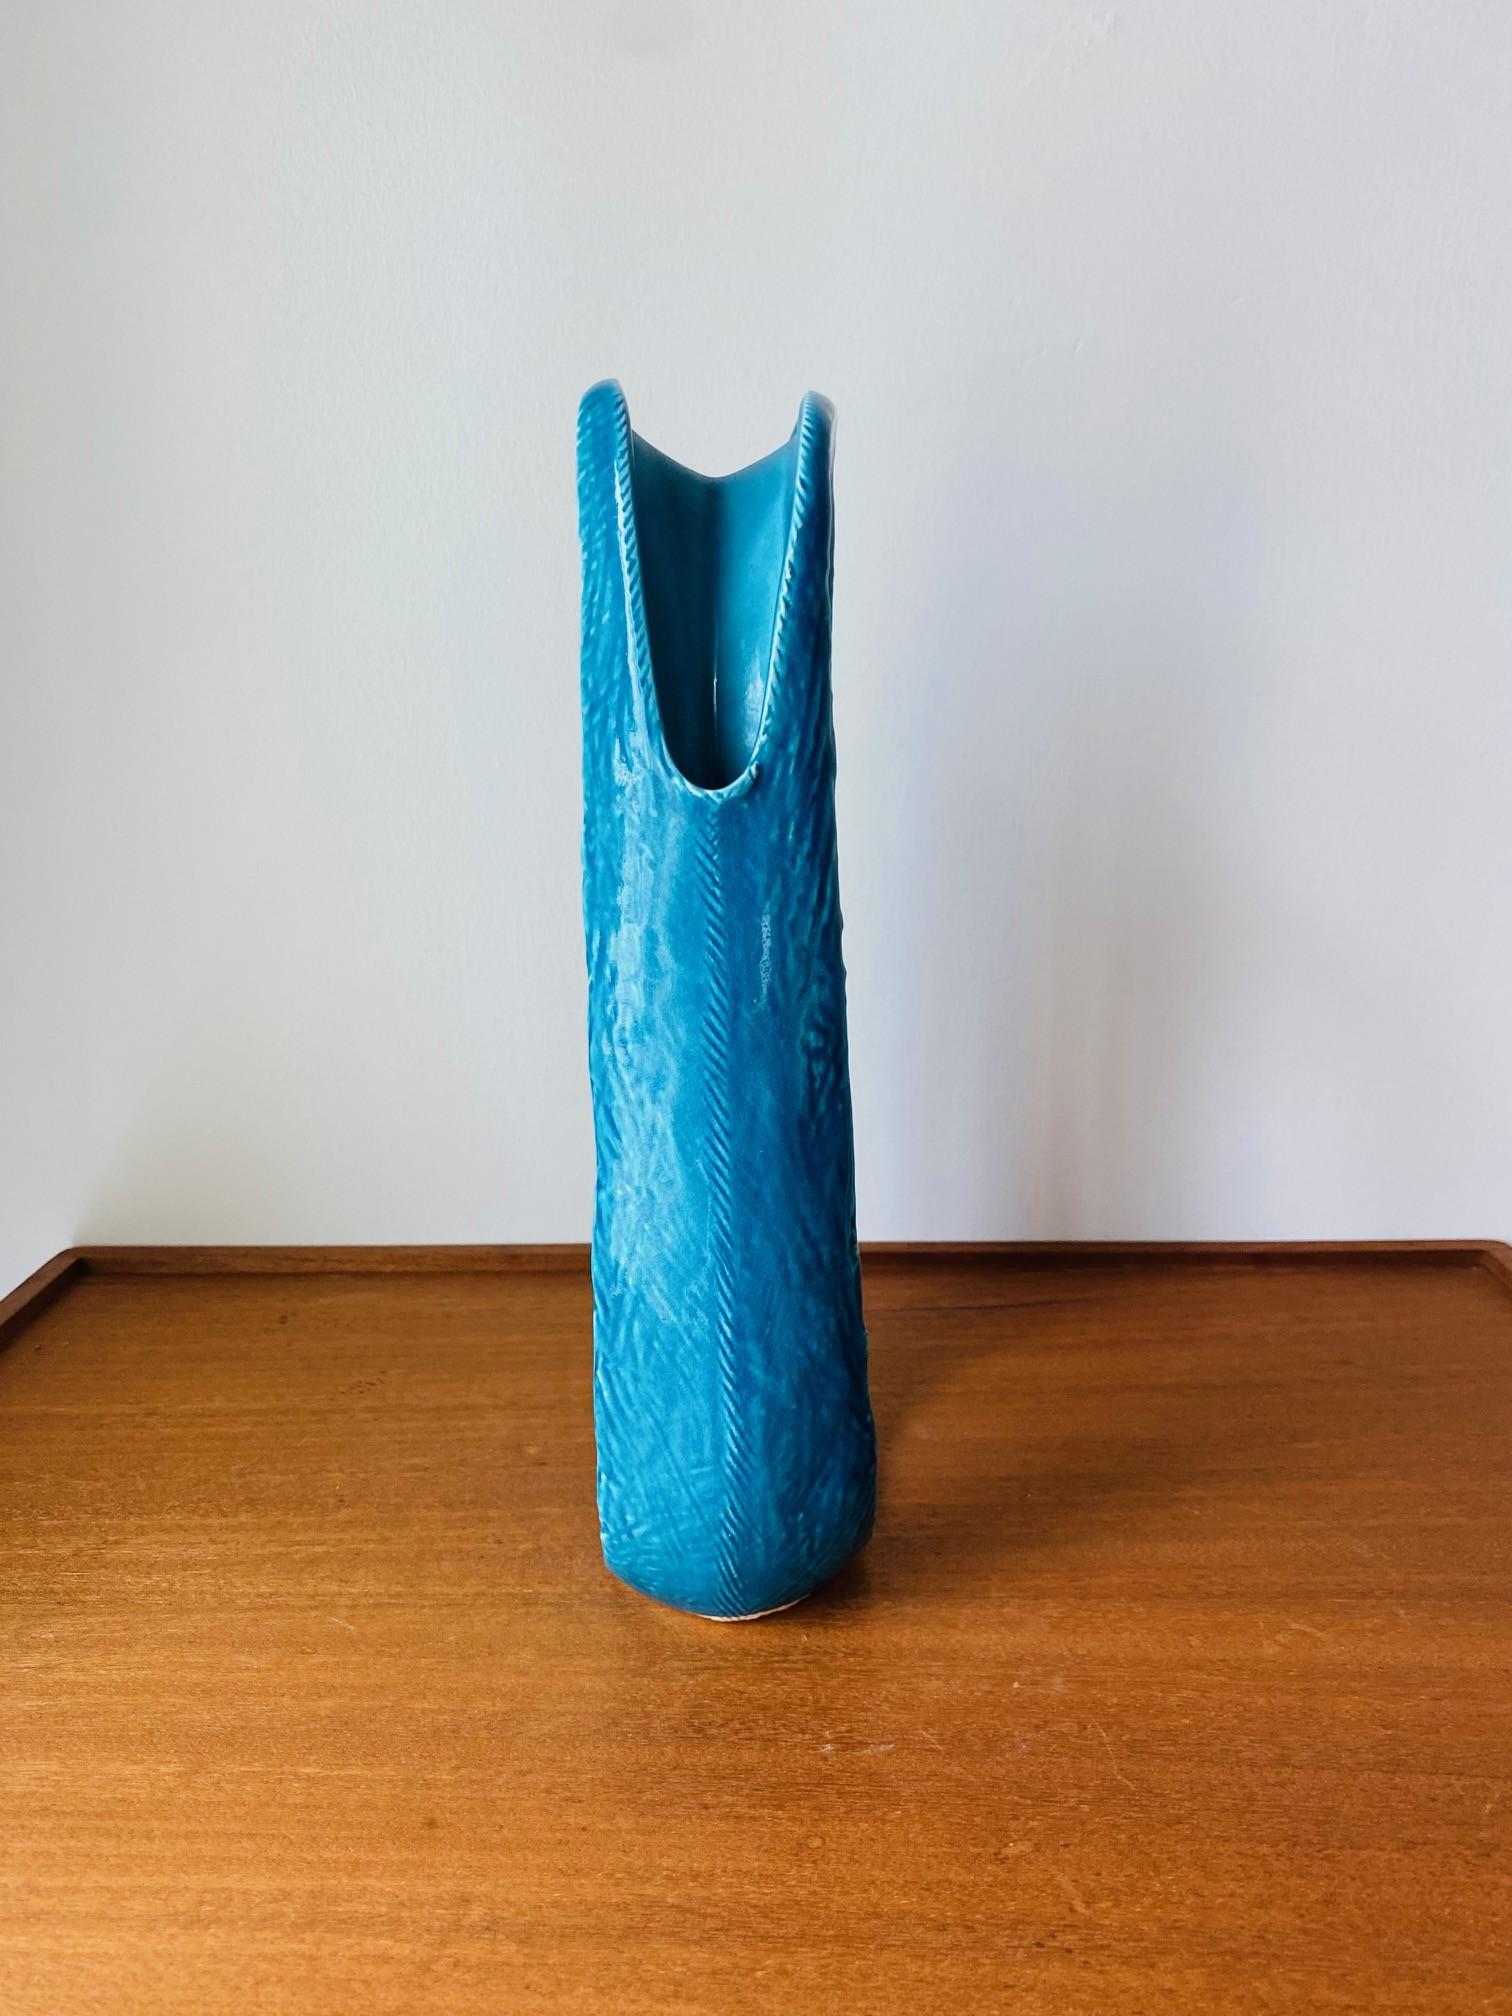 Organic Modern Ceramic Ikebana Sculptural Vase 1990s Japan For Sale 2